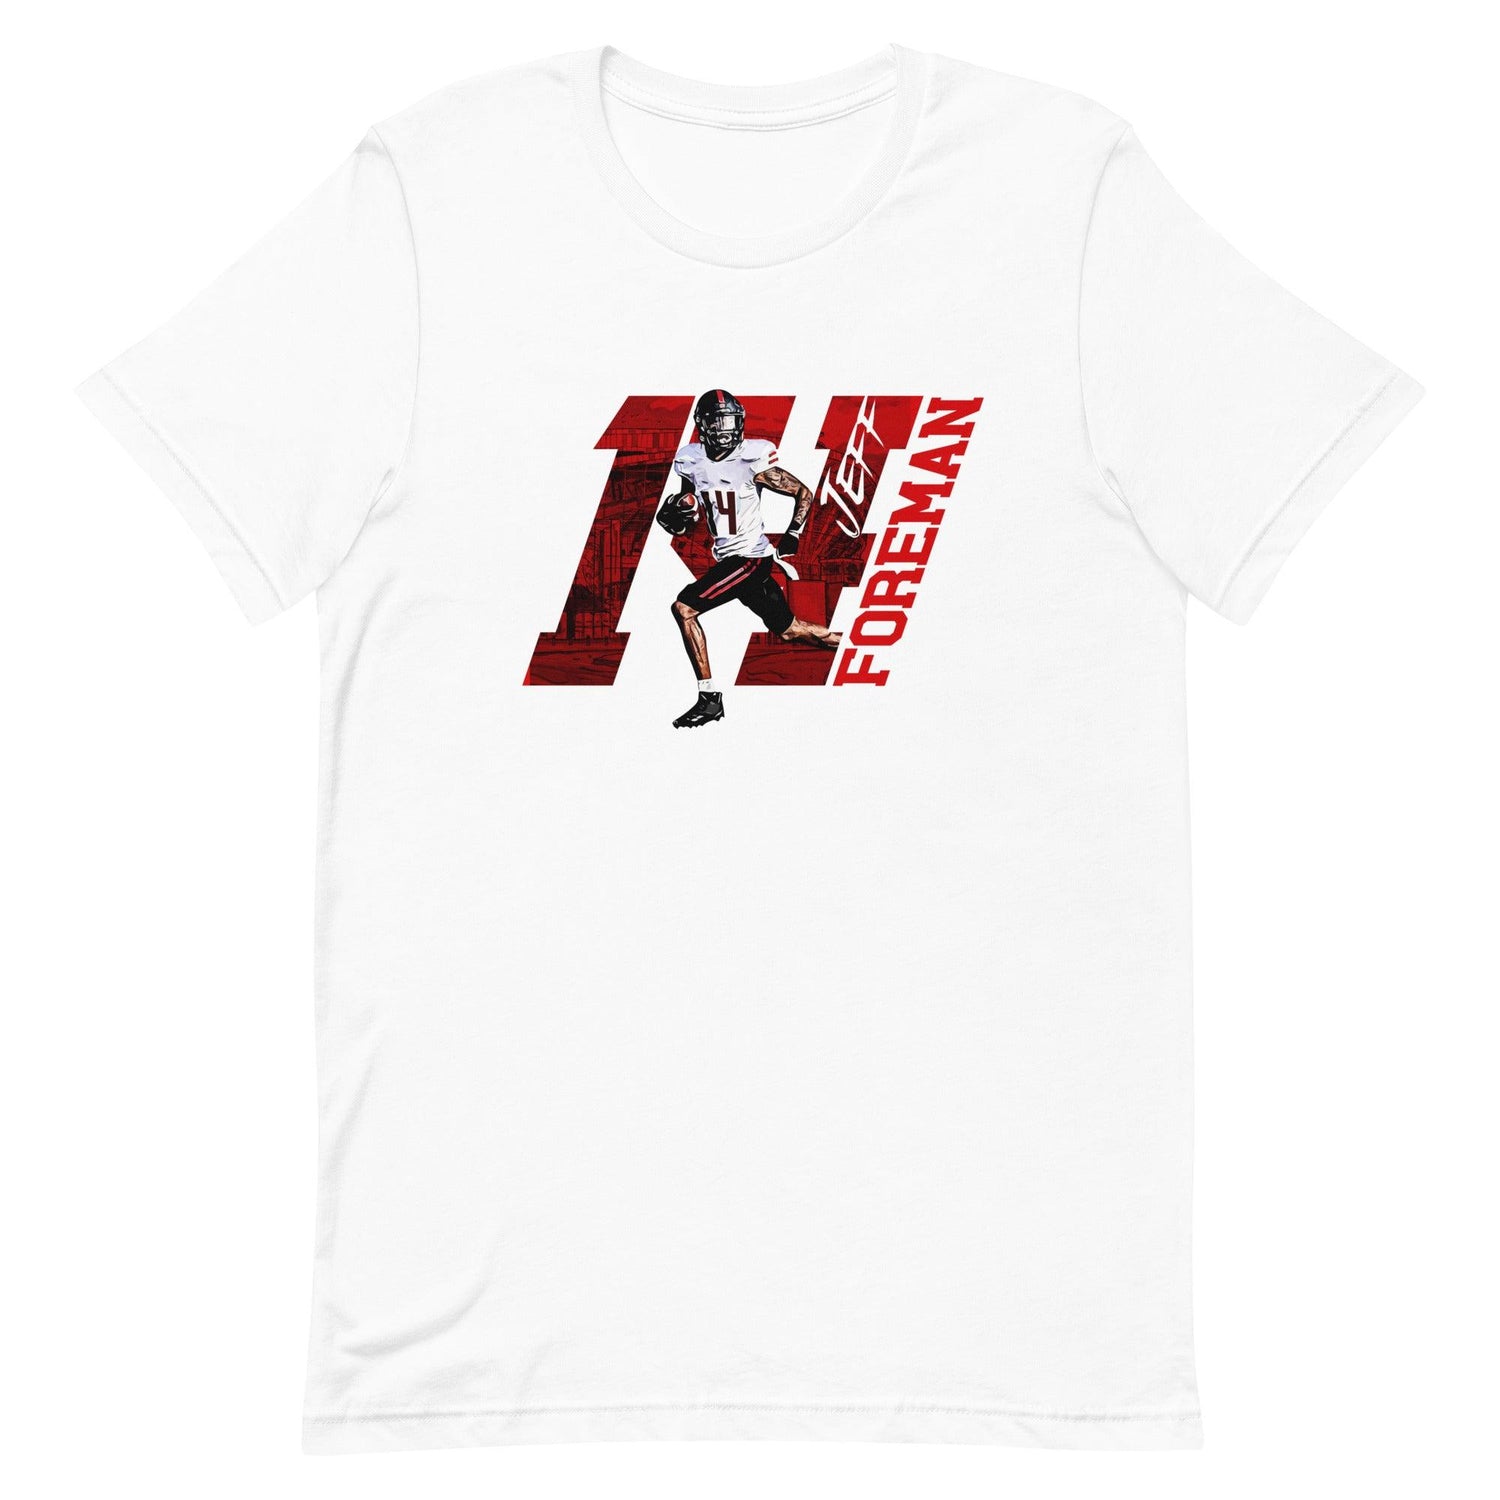 Jeff Foreman "14" t-shirt - Fan Arch